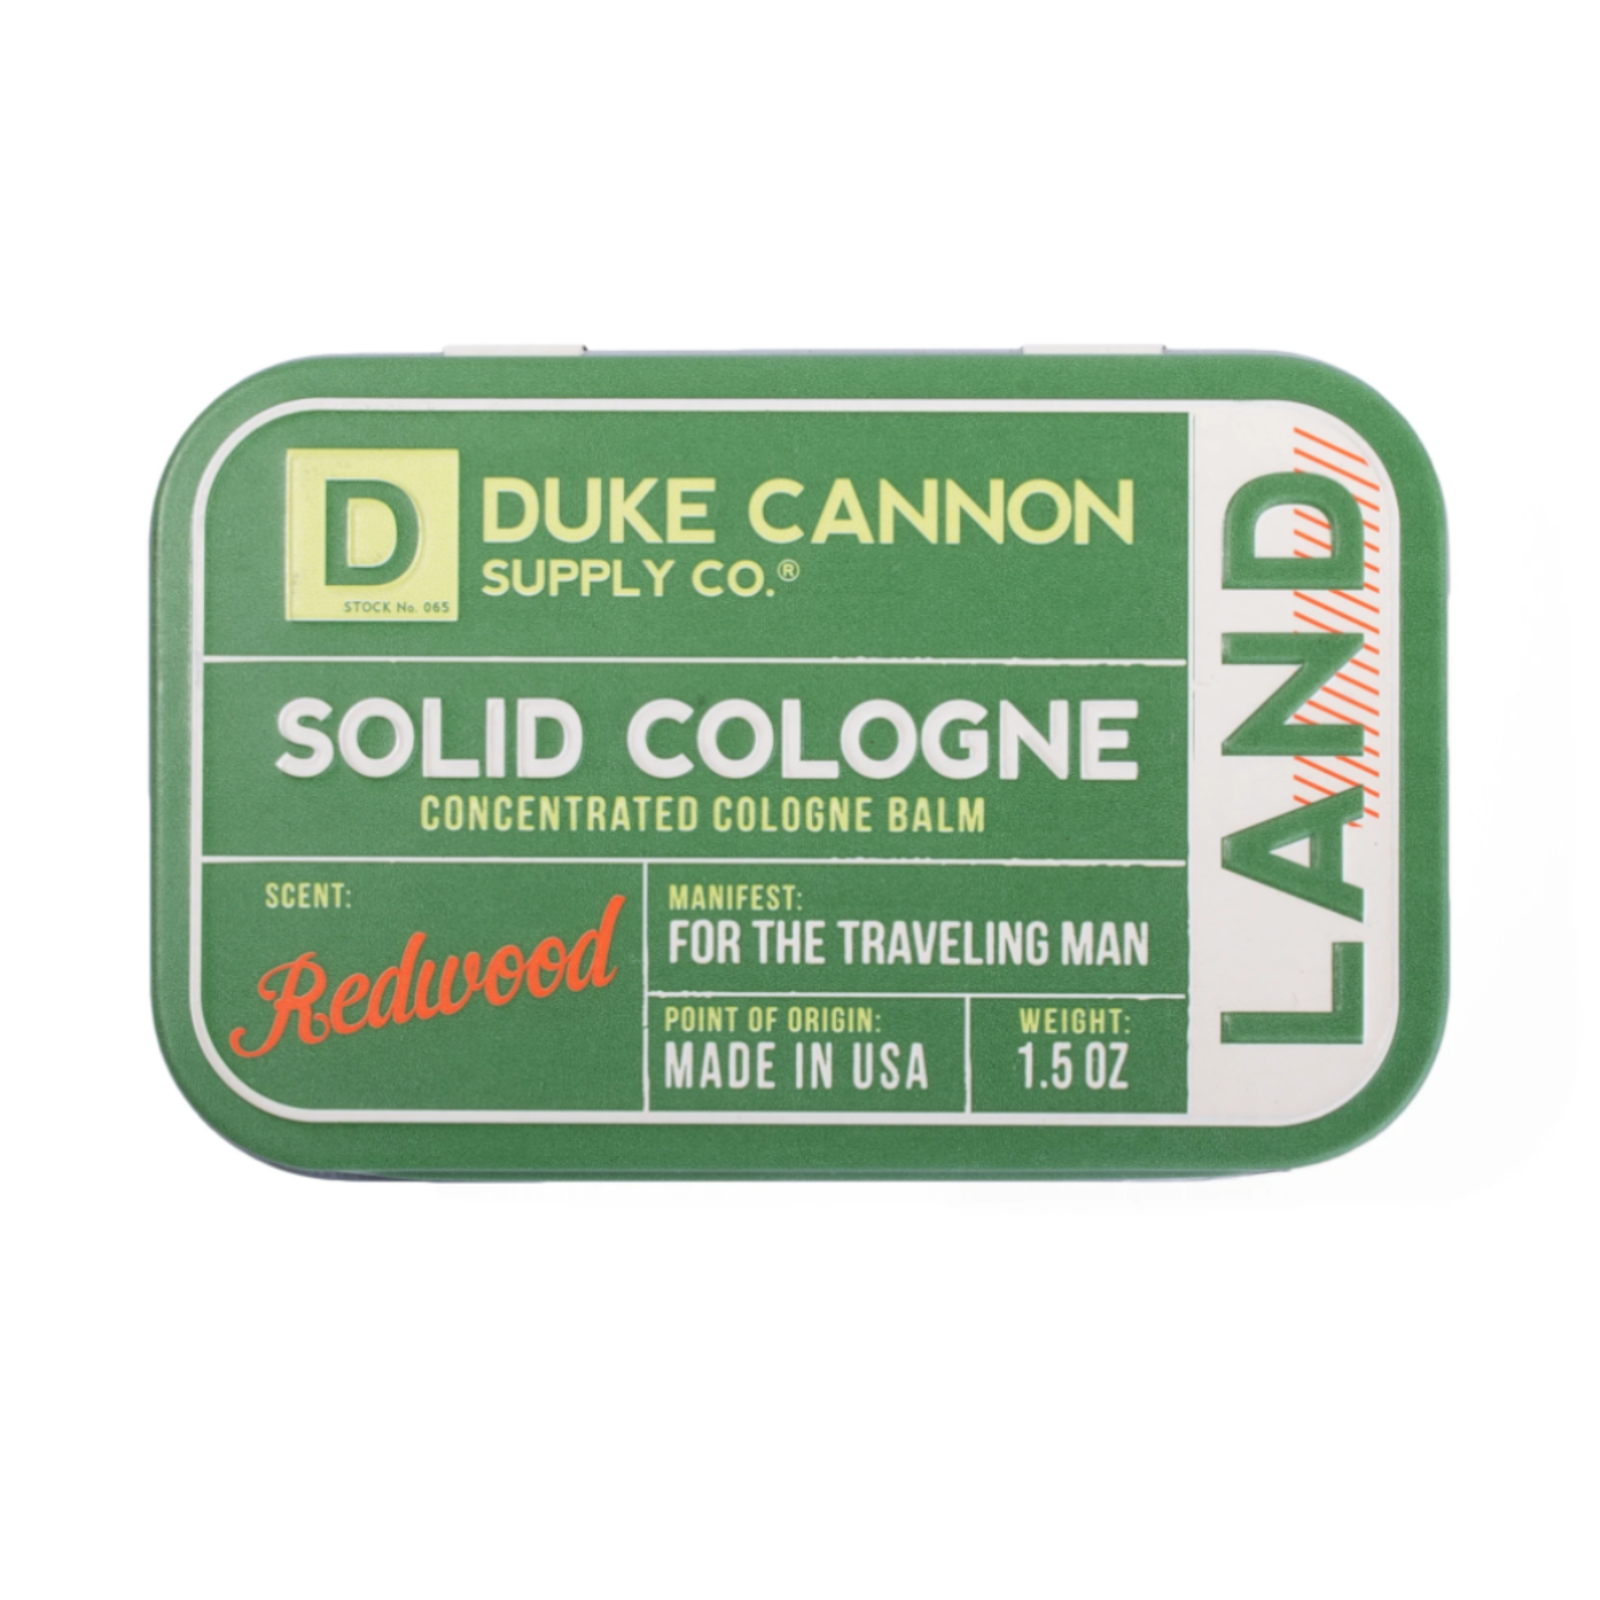 Duke Cannon Solid Cologne Land loading=